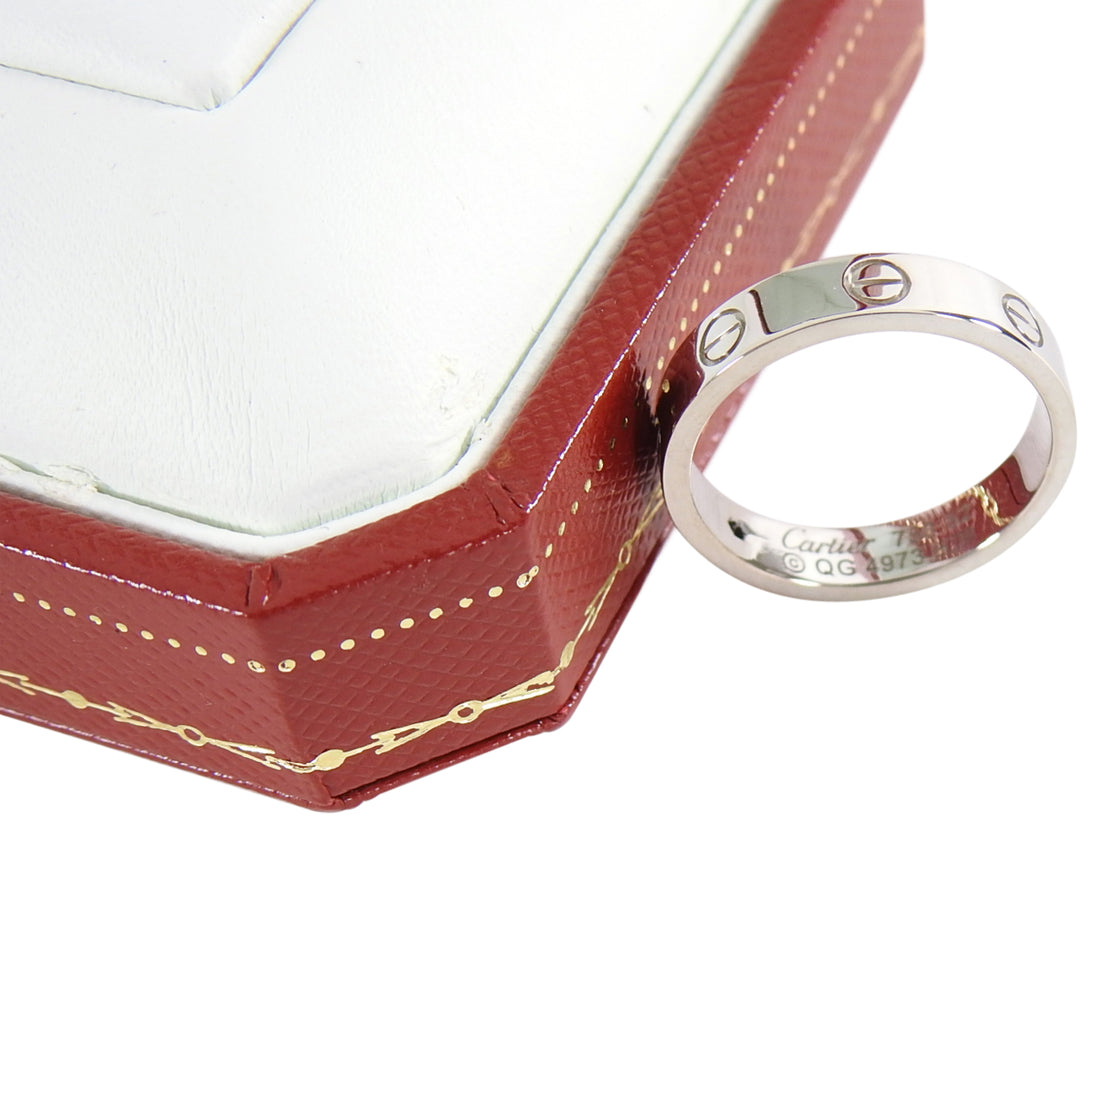 Cartier Love Diamond 18k White Gold Wedding Band Ring 4mm - 52 / 6